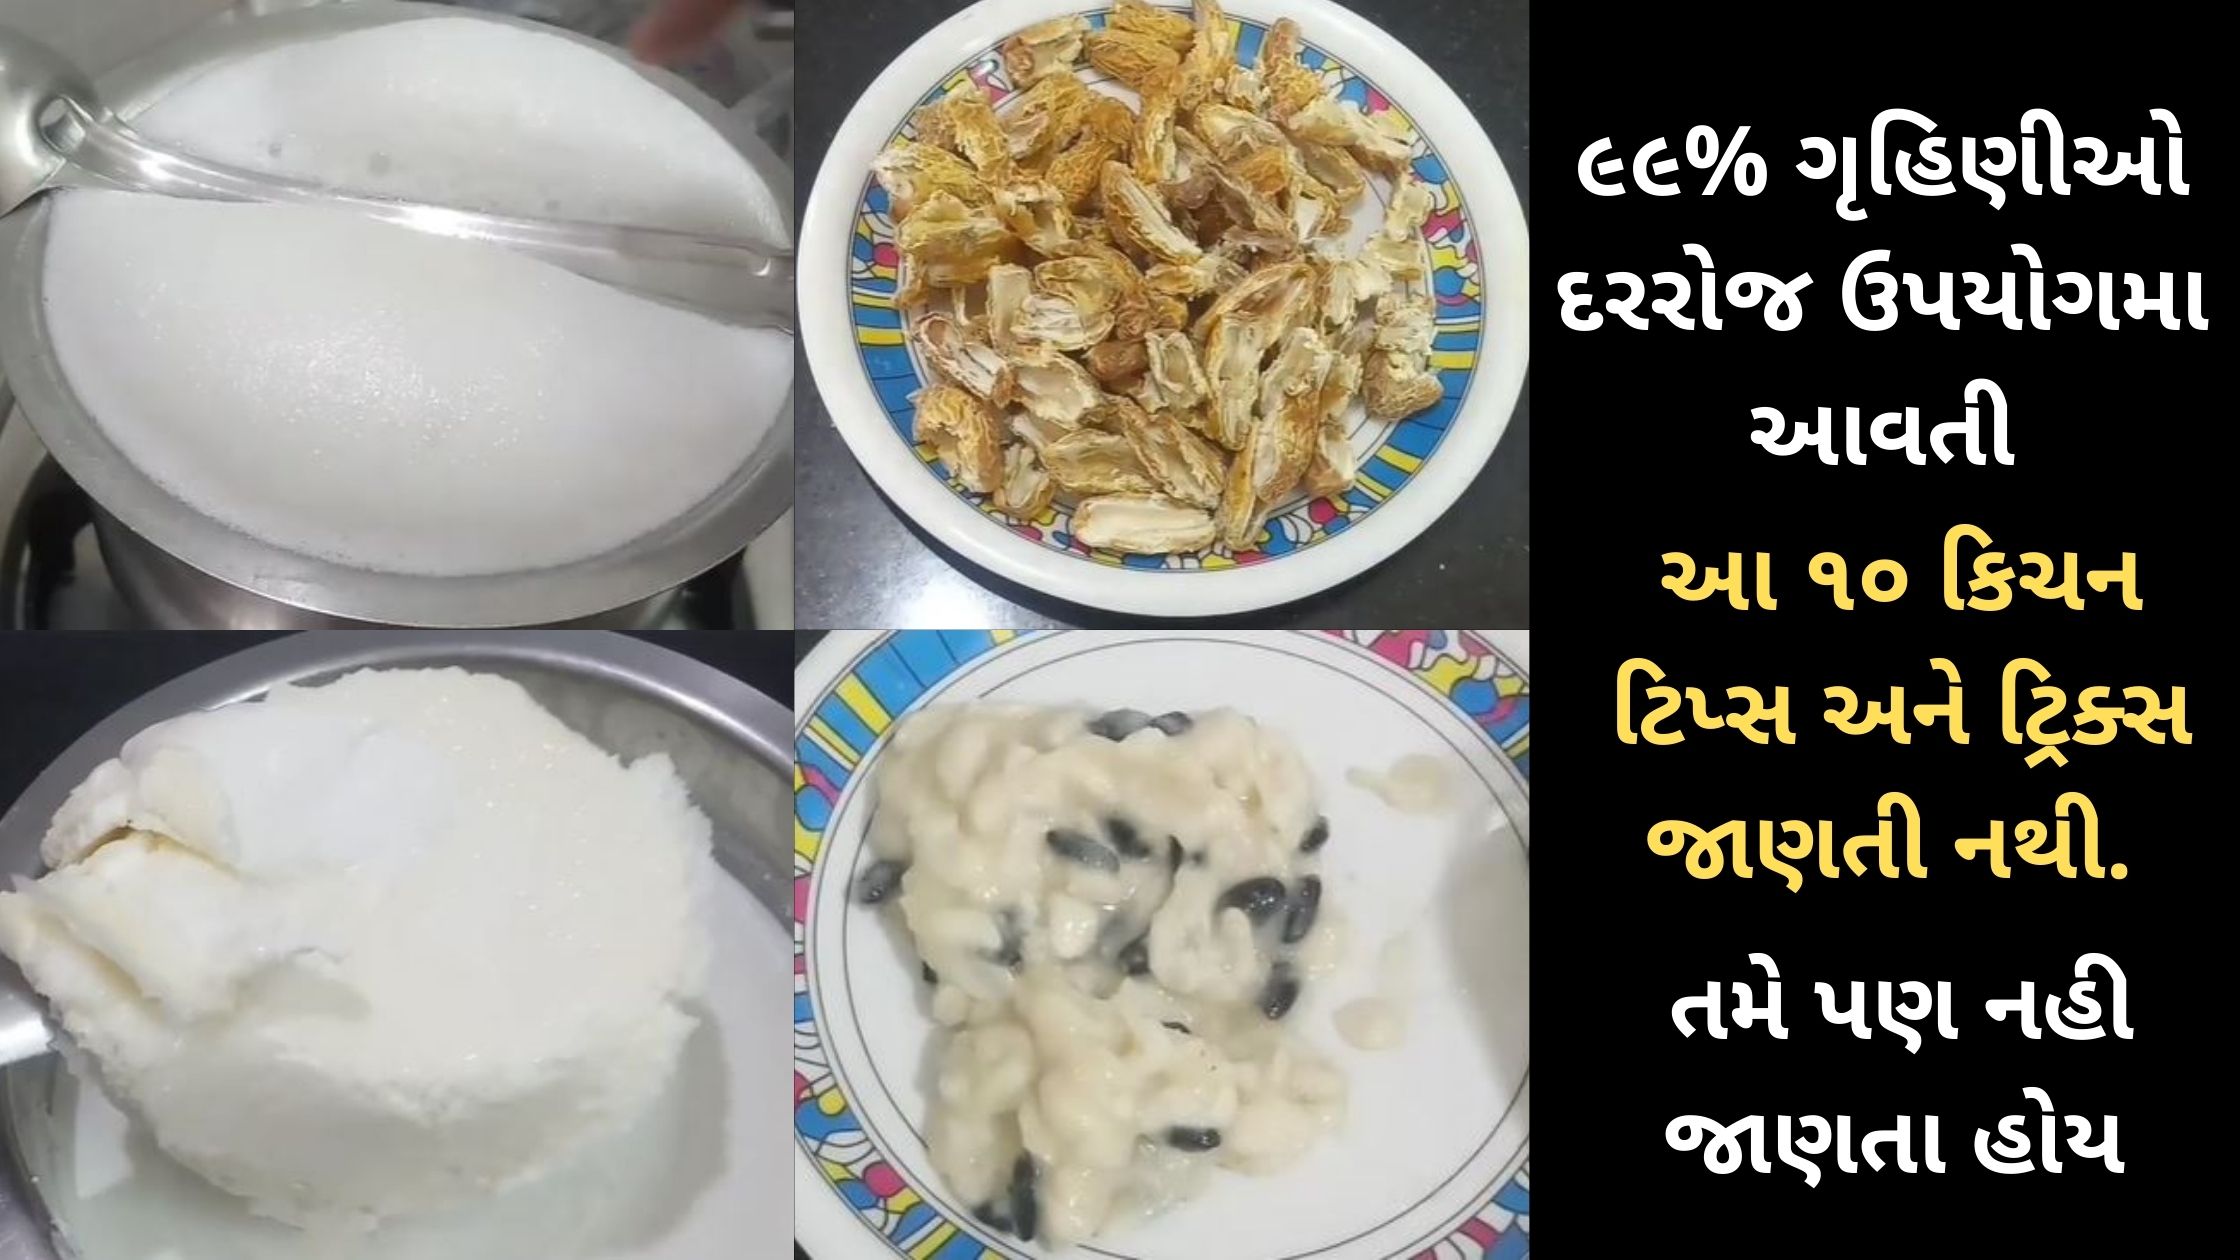 Kitchen tips and tricks in gujarati